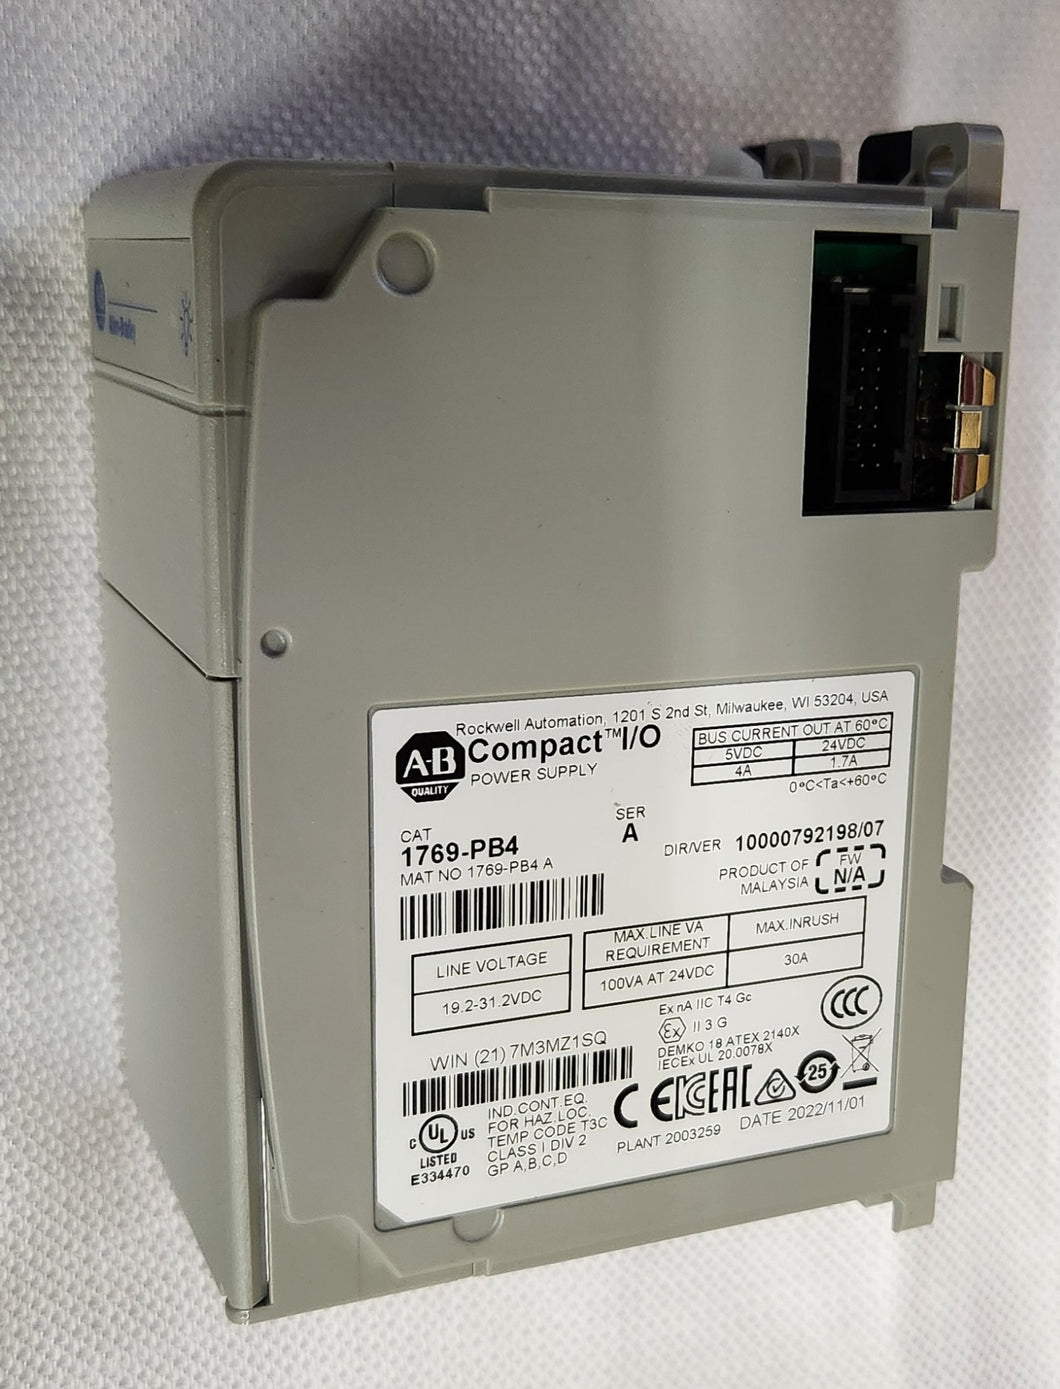 P0009860 A - Compactlogix Power Supply